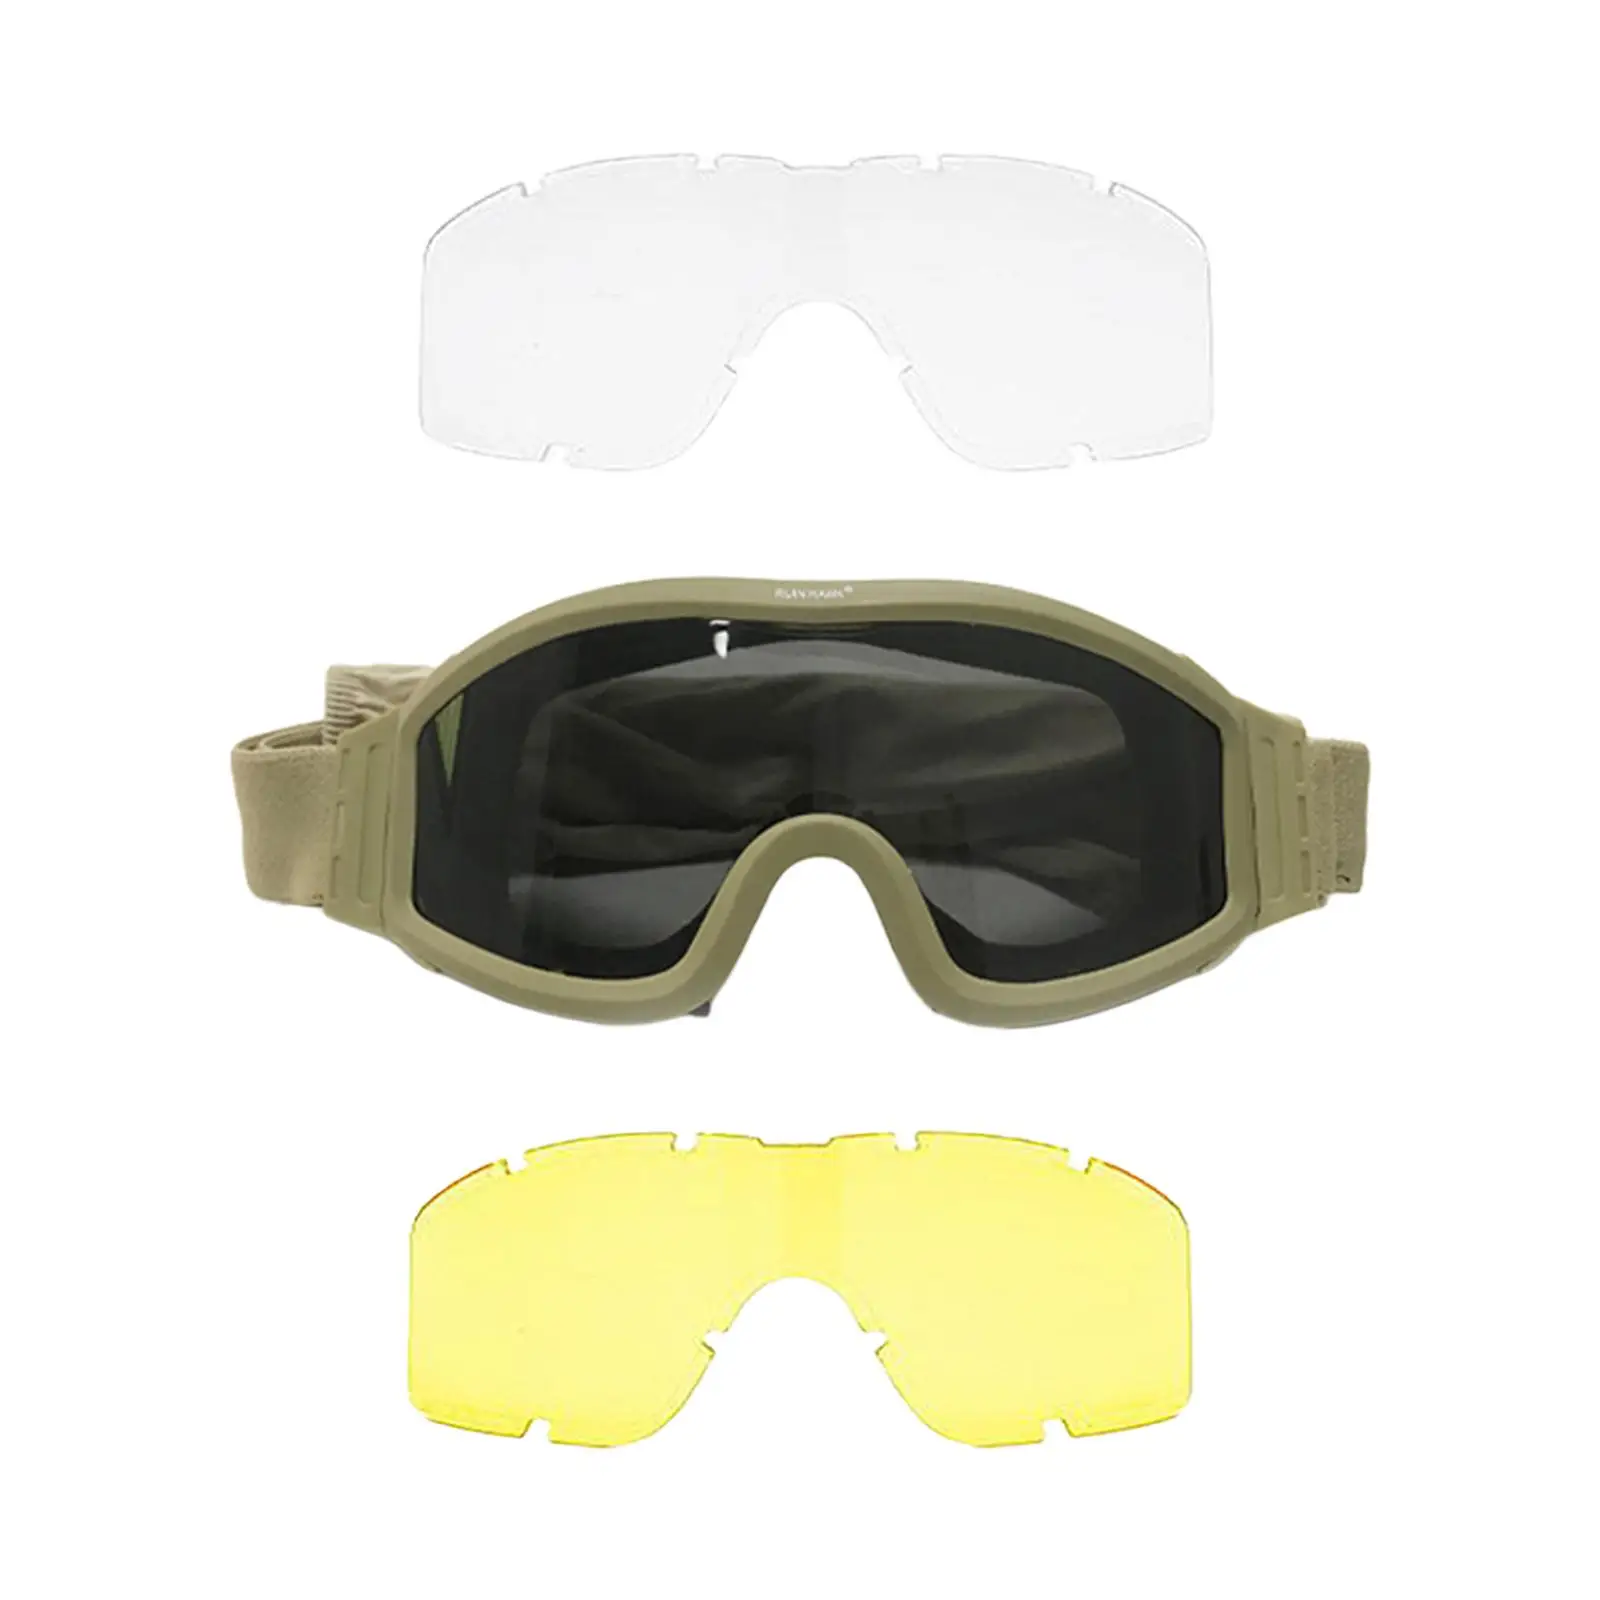 Black Transparent Yellow Motorcycle Goggles Windproof Protective Scratch Resistant Outdoor for Hiking Biking Desert Combat Sport